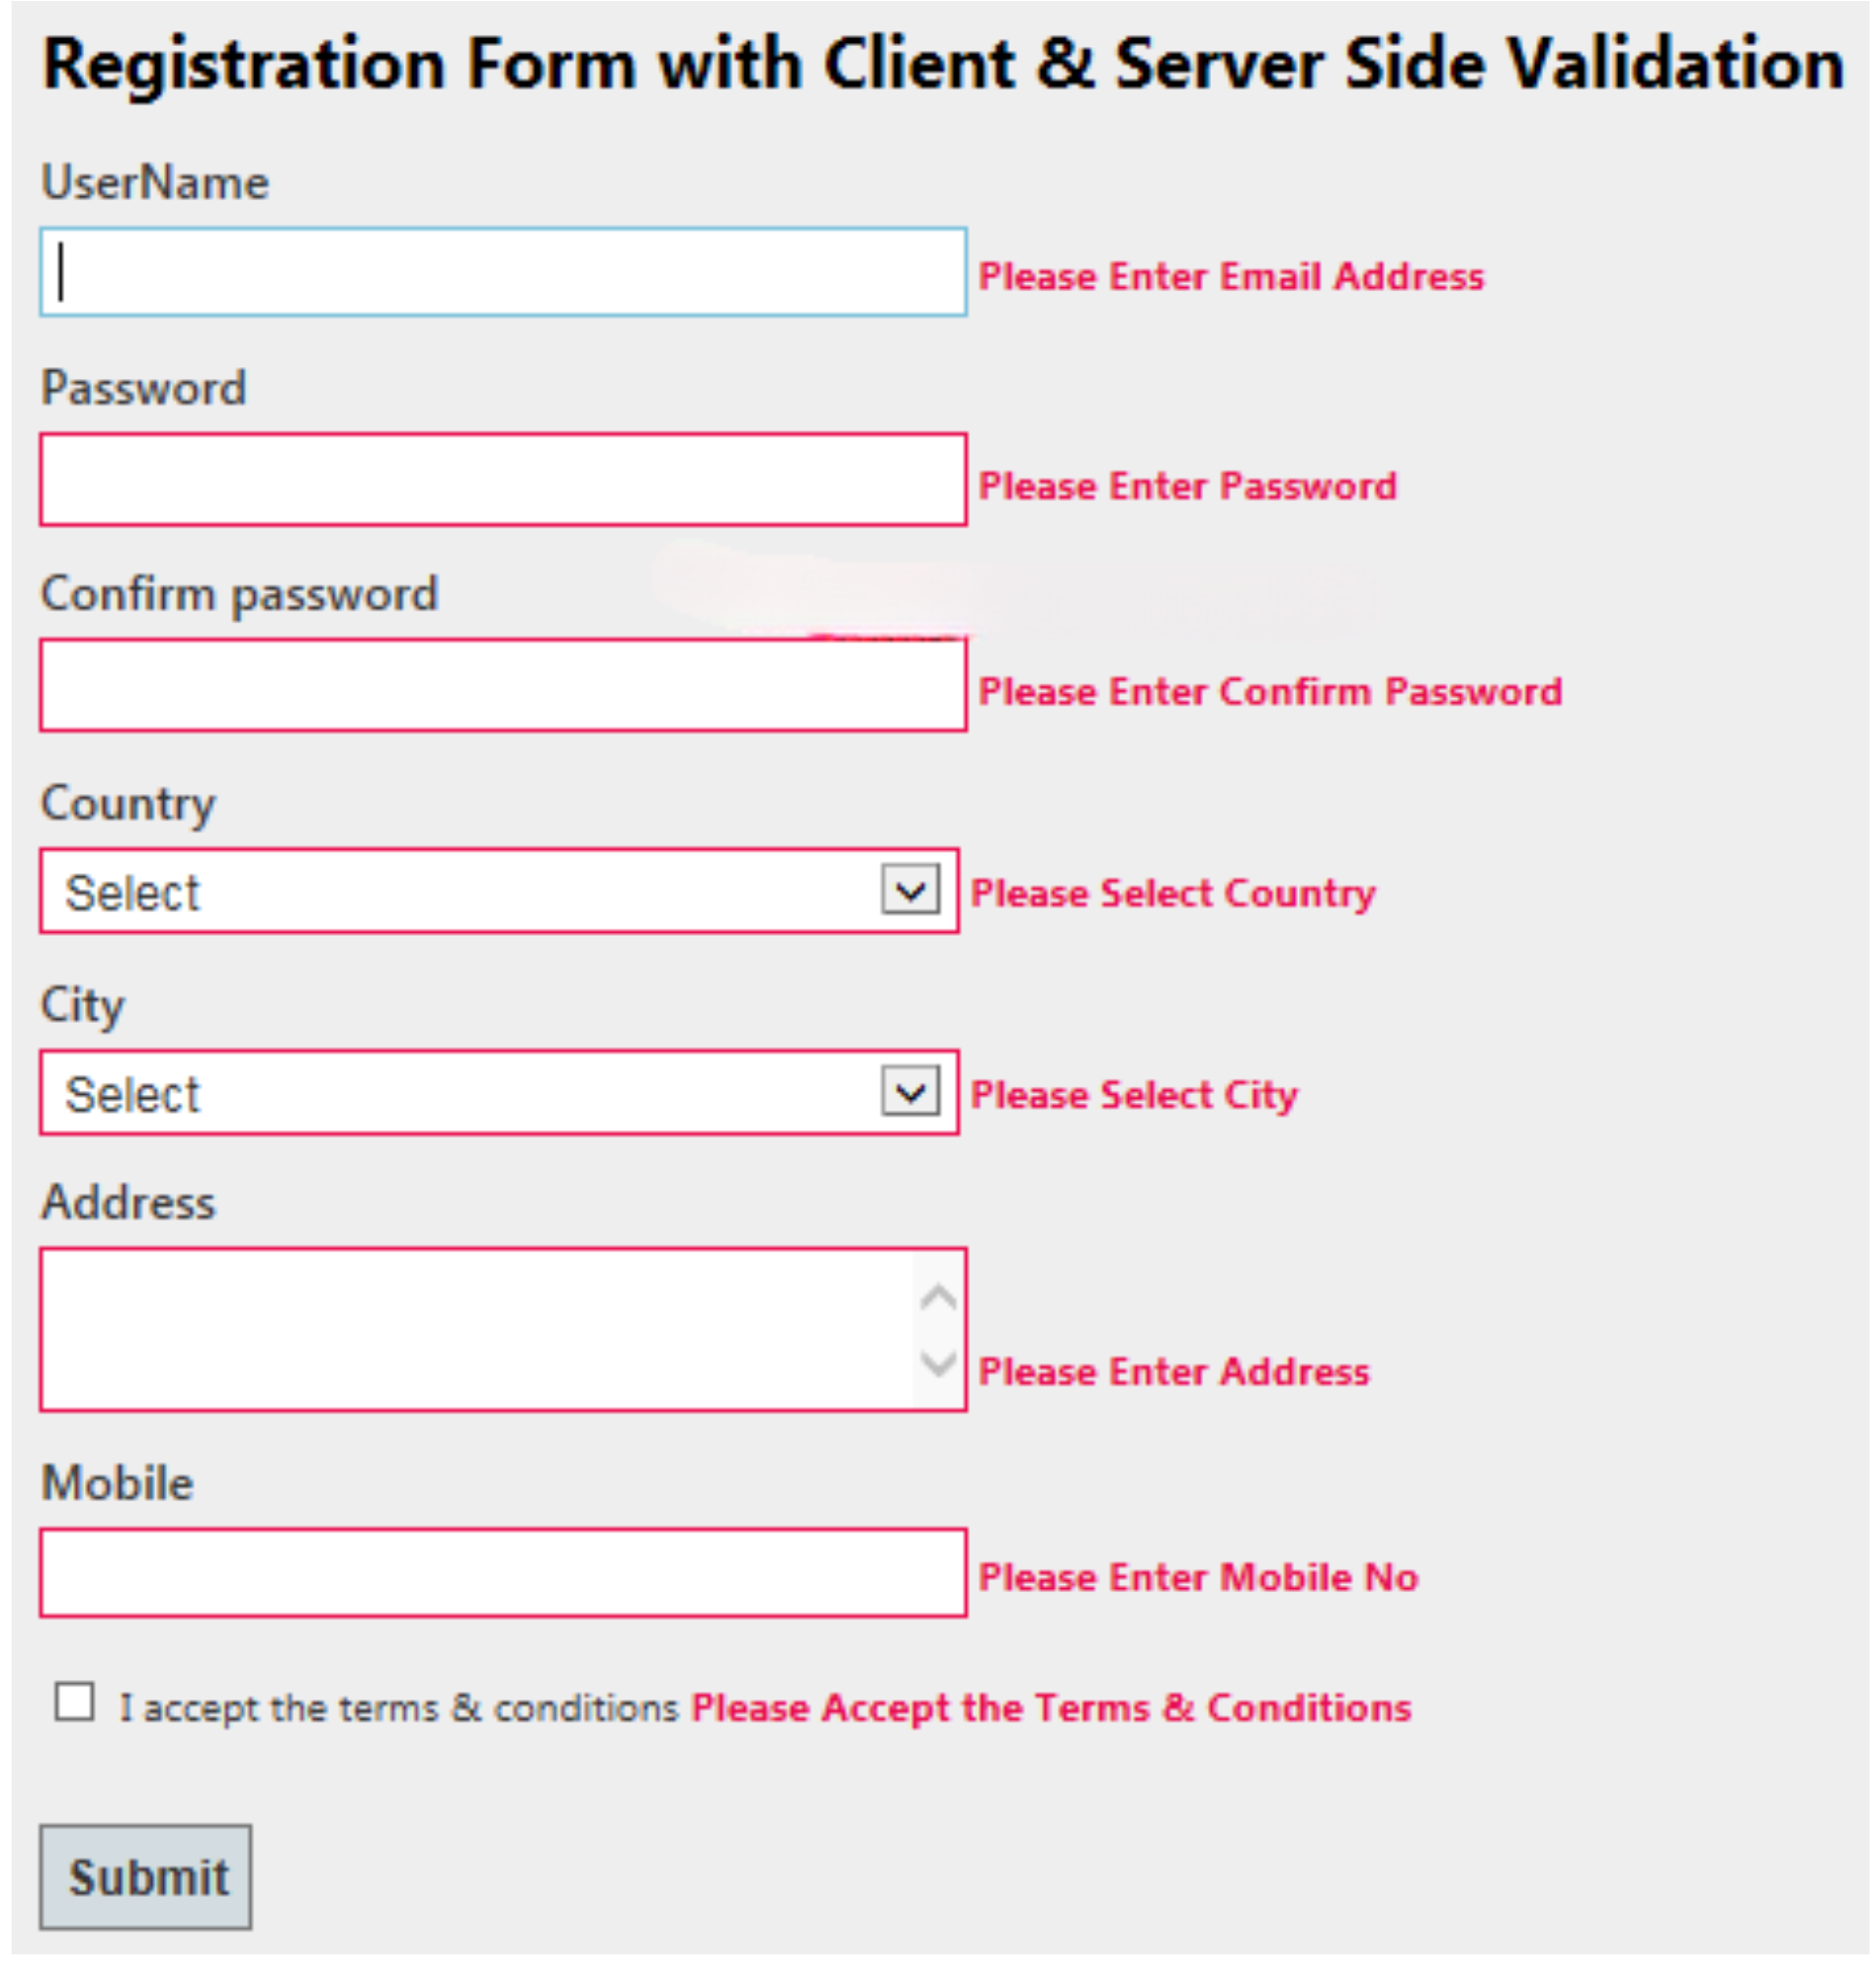 Validation of the registration form